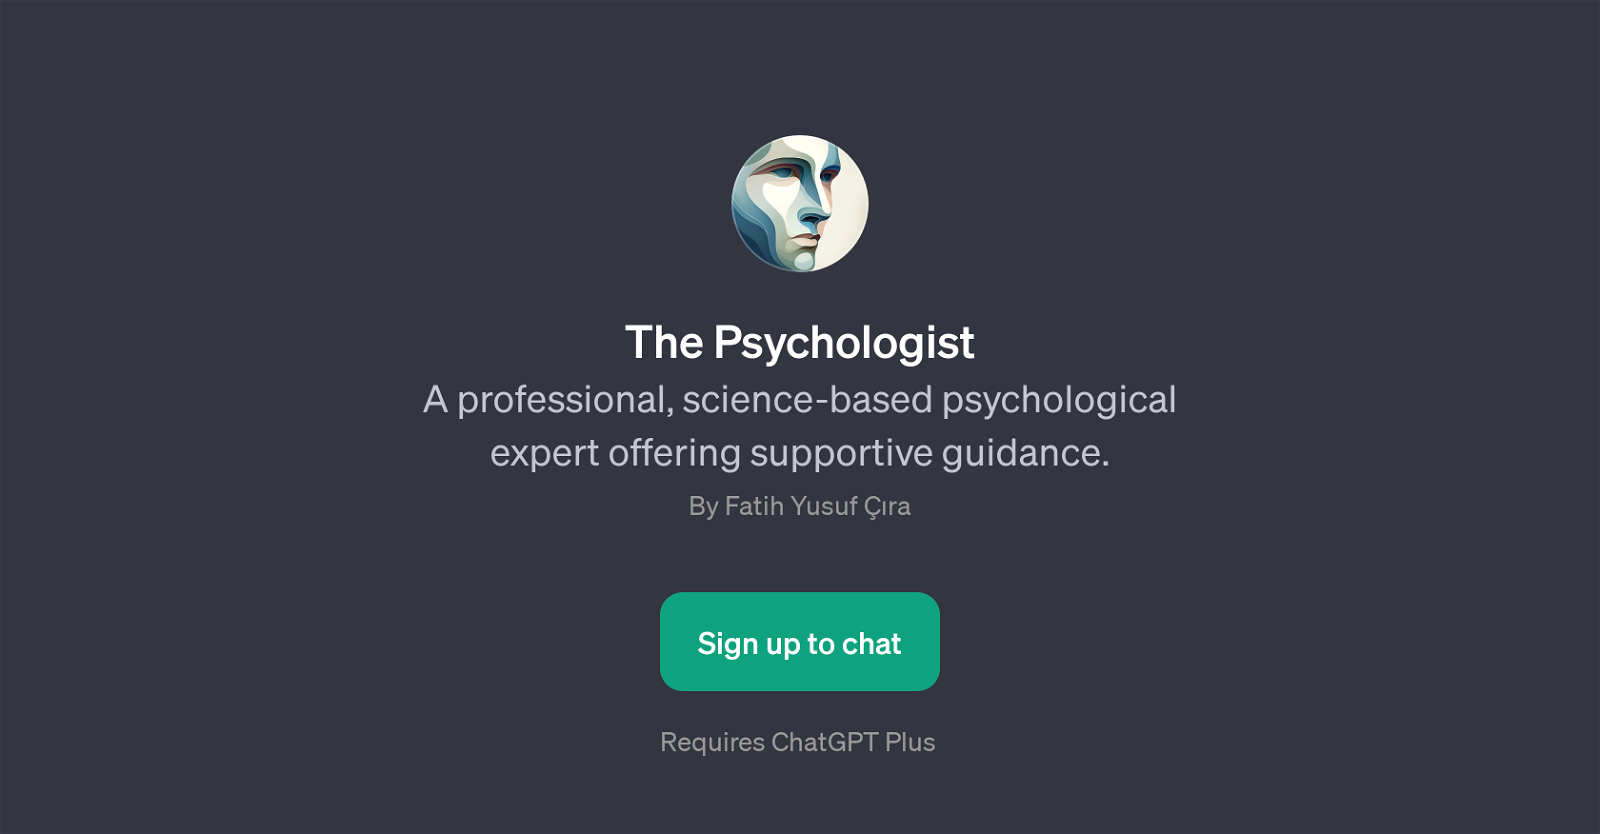 The Psychologist website